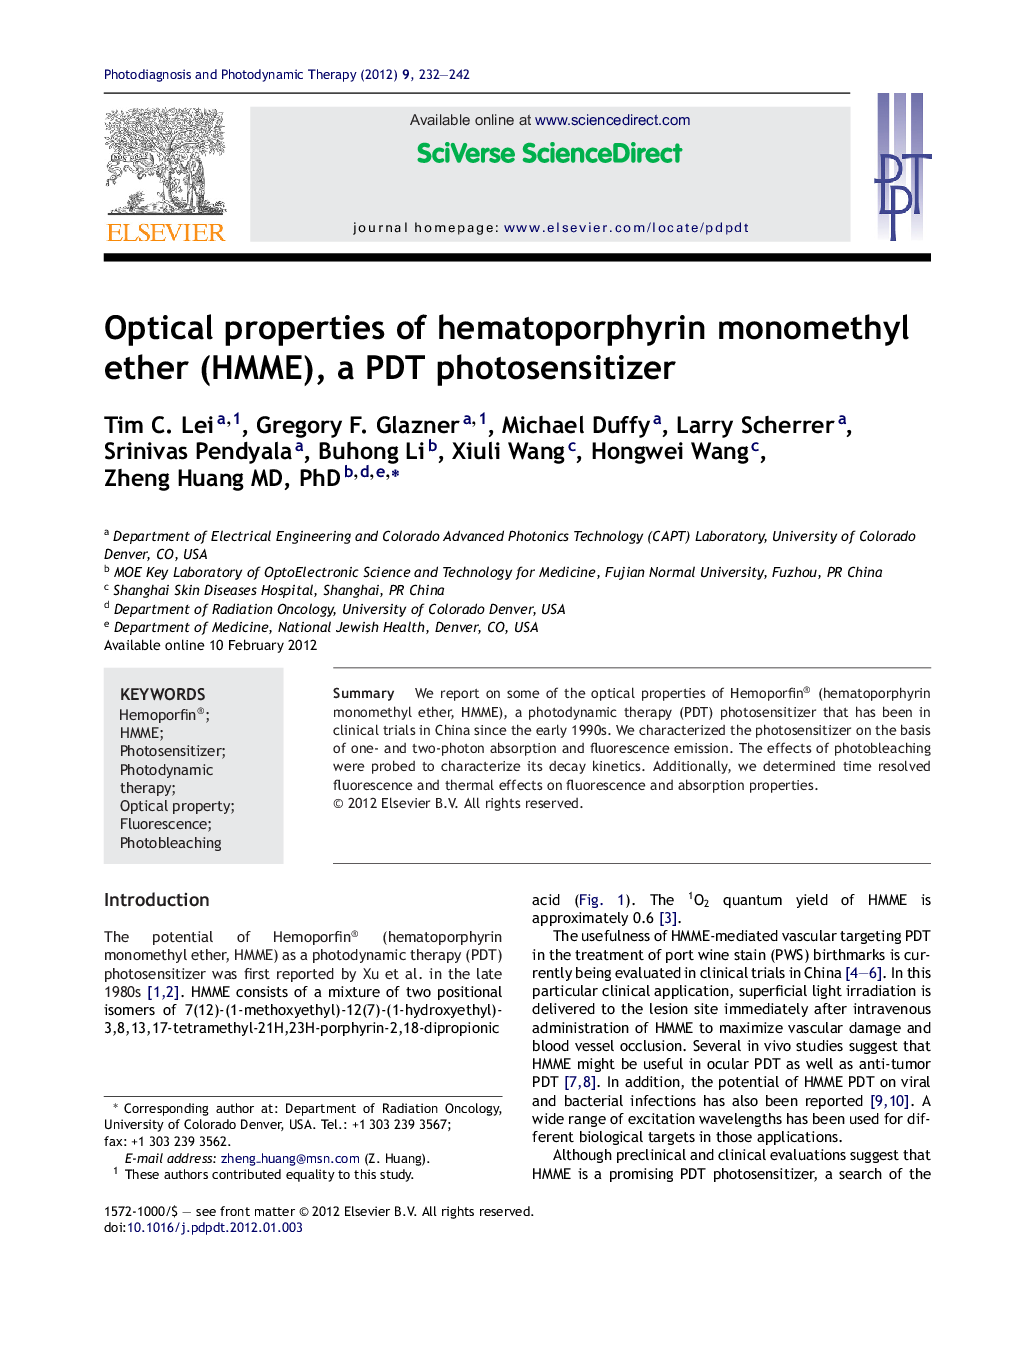 Optical properties of hematoporphyrin monomethyl ether (HMME), a PDT photosensitizer